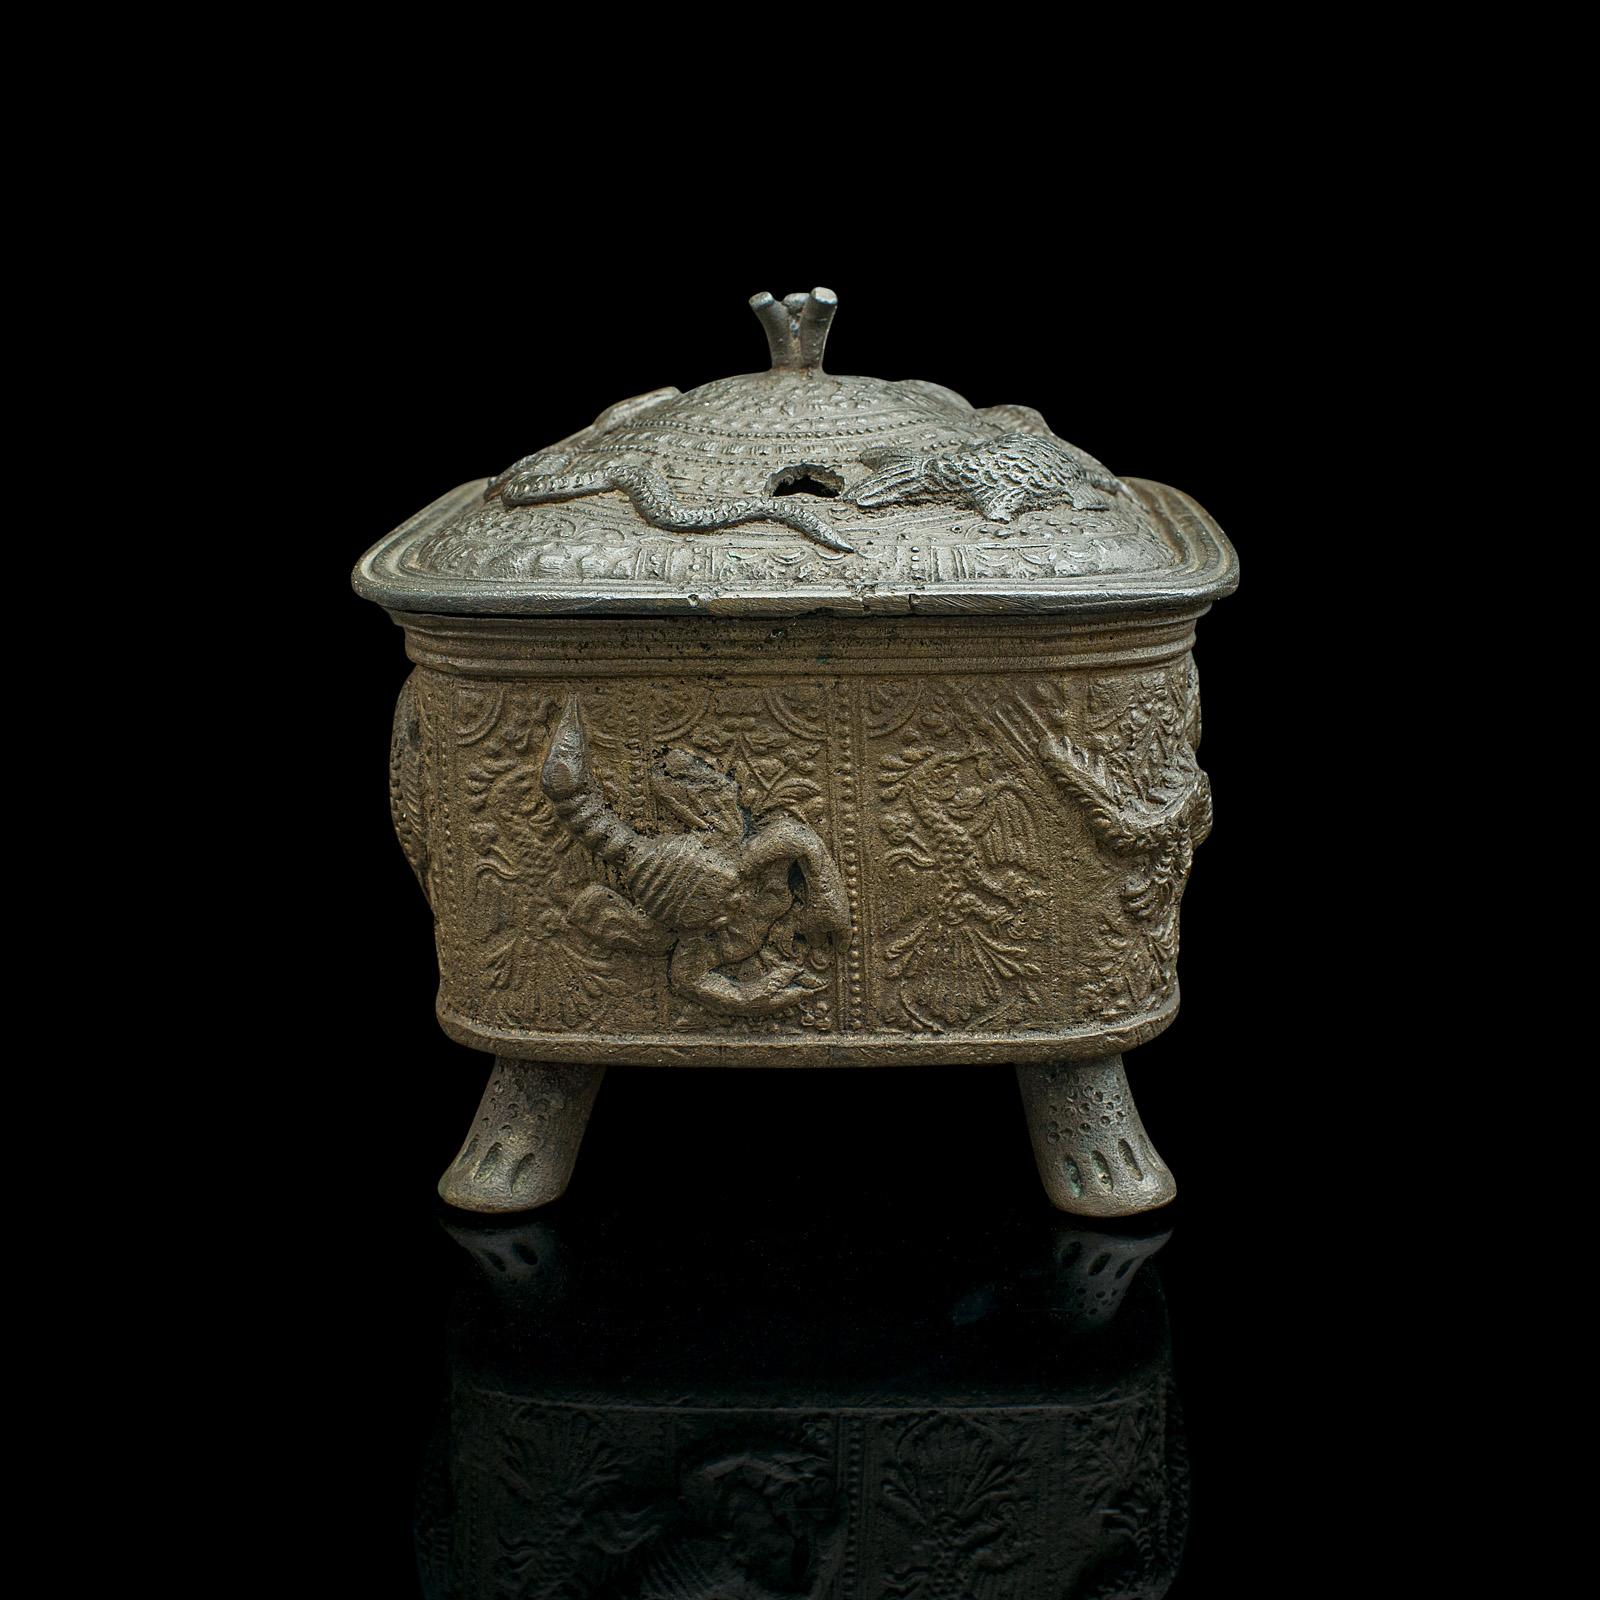 Antique Decorative Censer, Chinese, Bronze, Incense Burner, Victorian, C.1850 For Sale 1